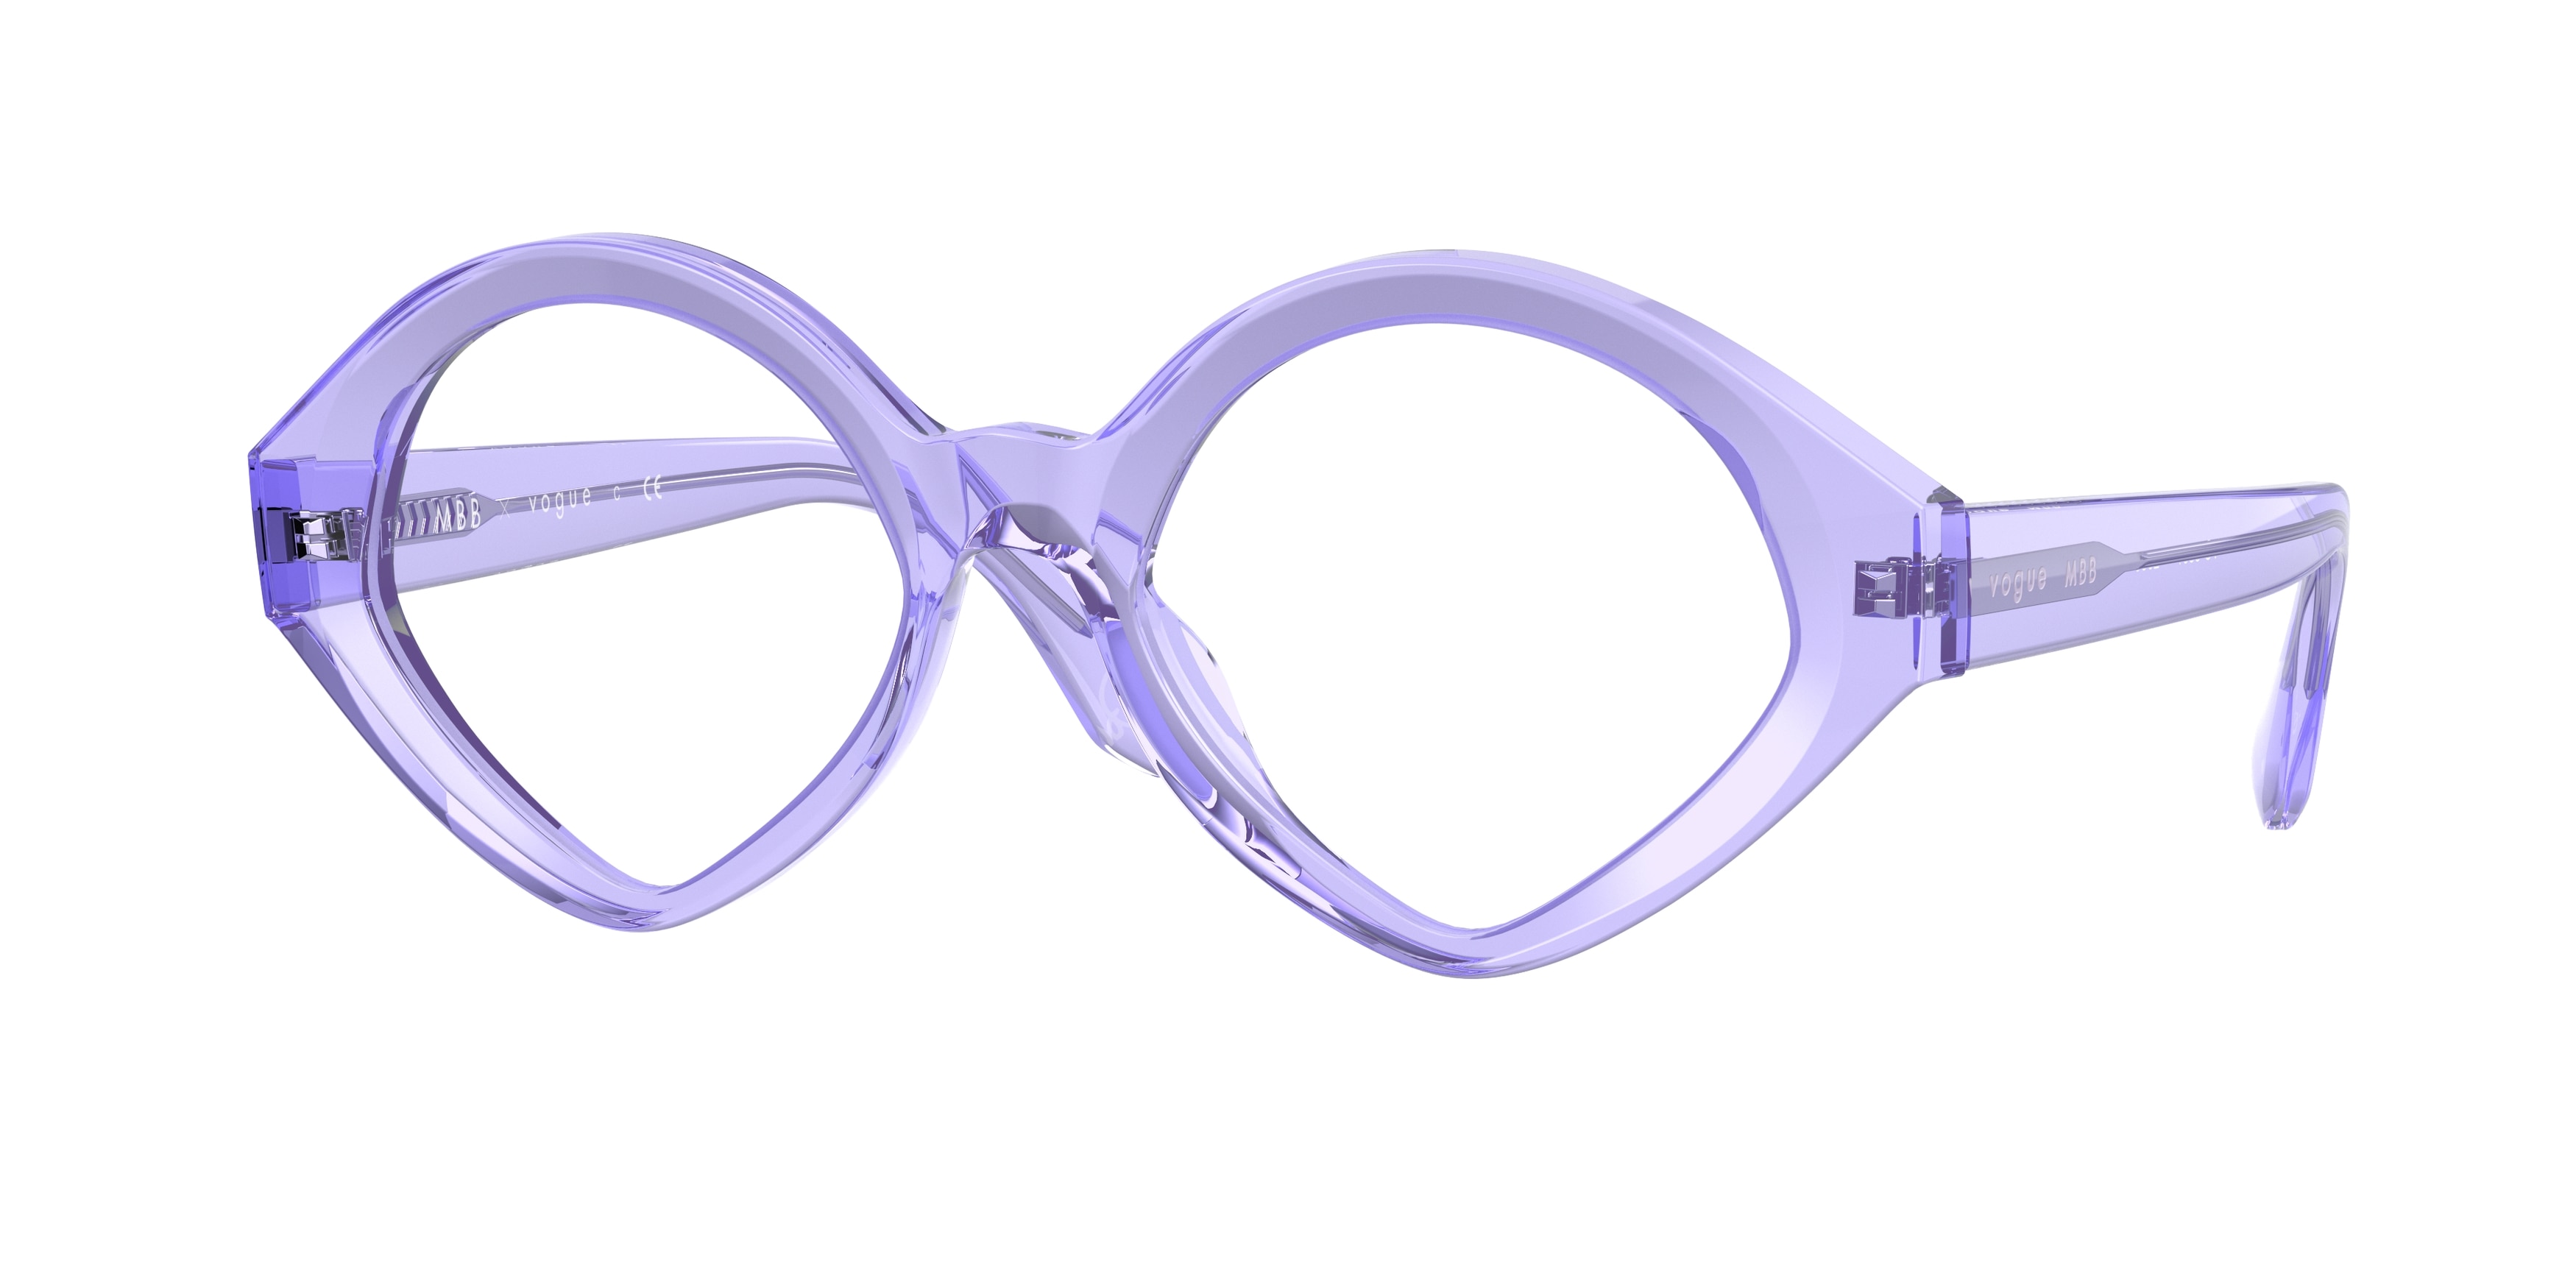  clear/transparent lilac